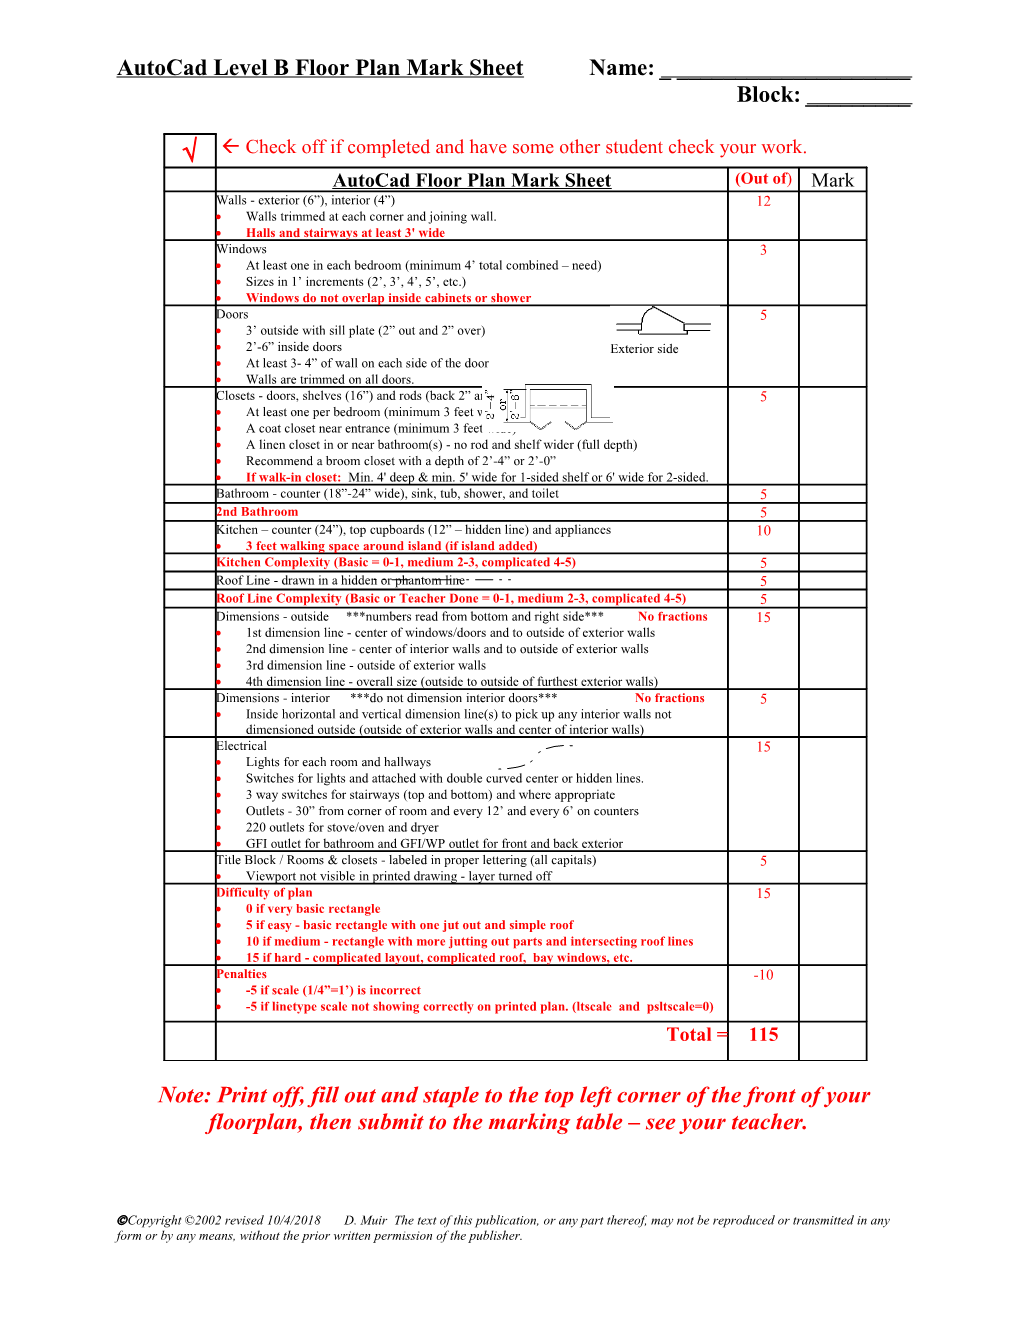 Autocad Floor Plan Mark Sheet